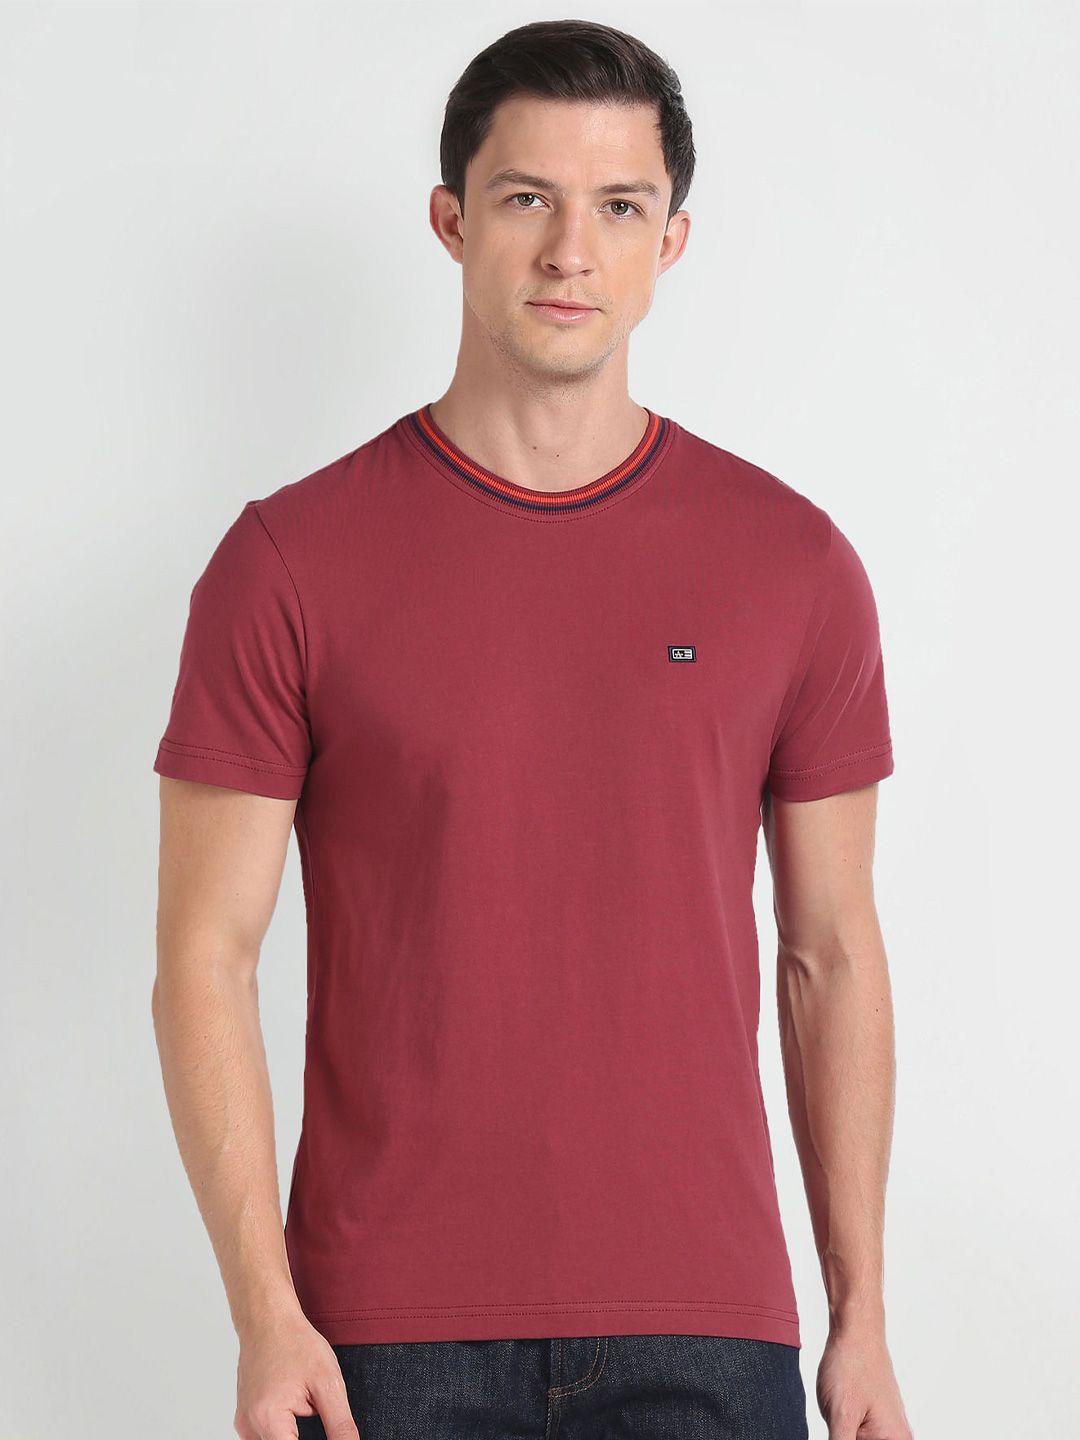 arrow sport round neck pure cotton t-shirt